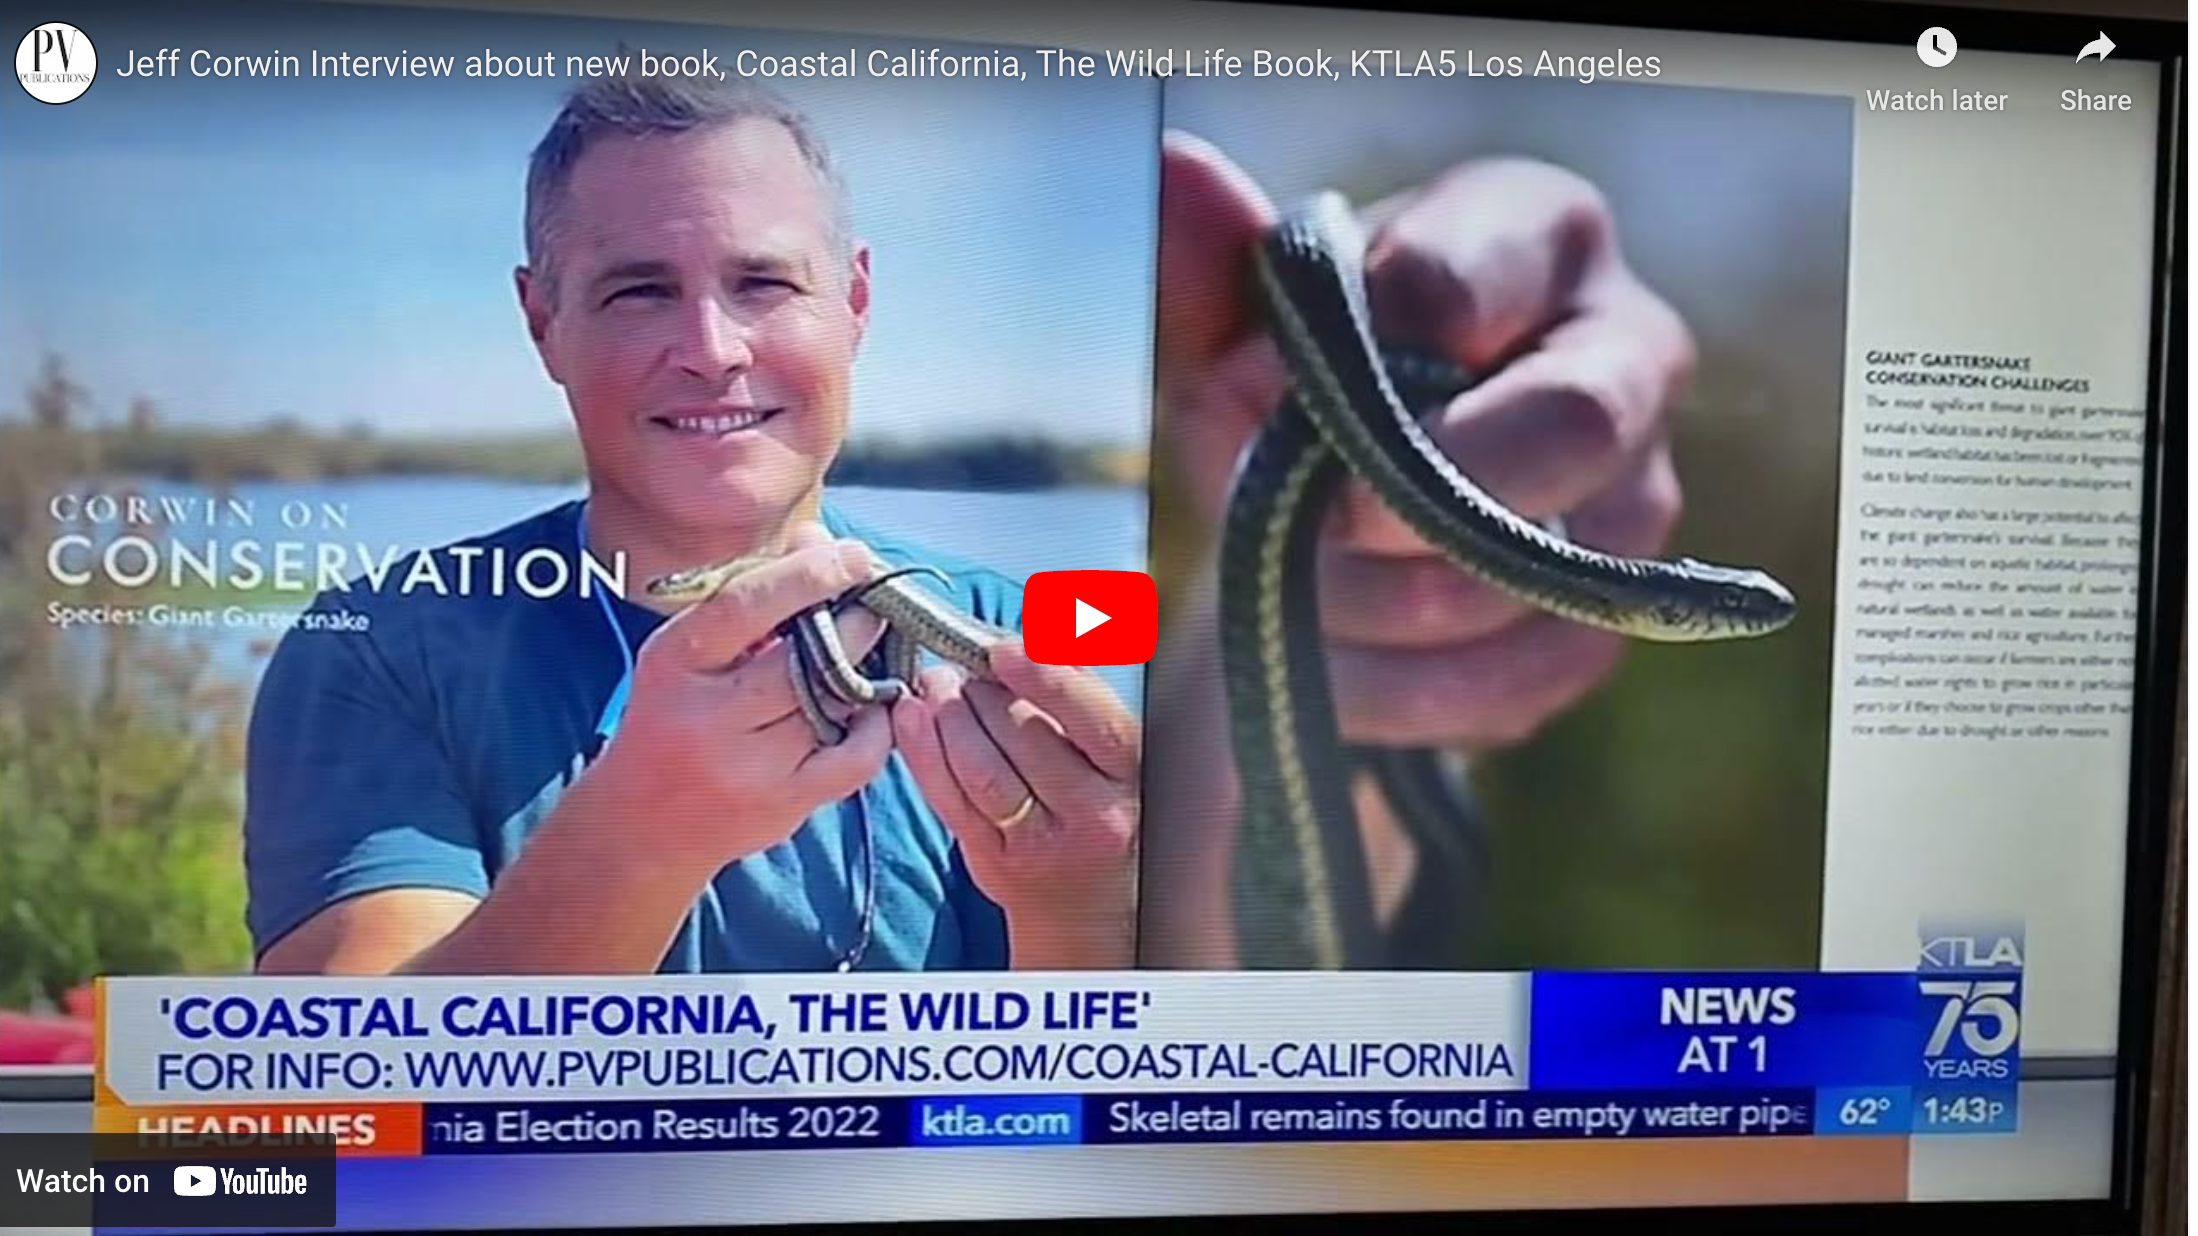 Load video: KCAL Talks about Coastal California, The Wild Life